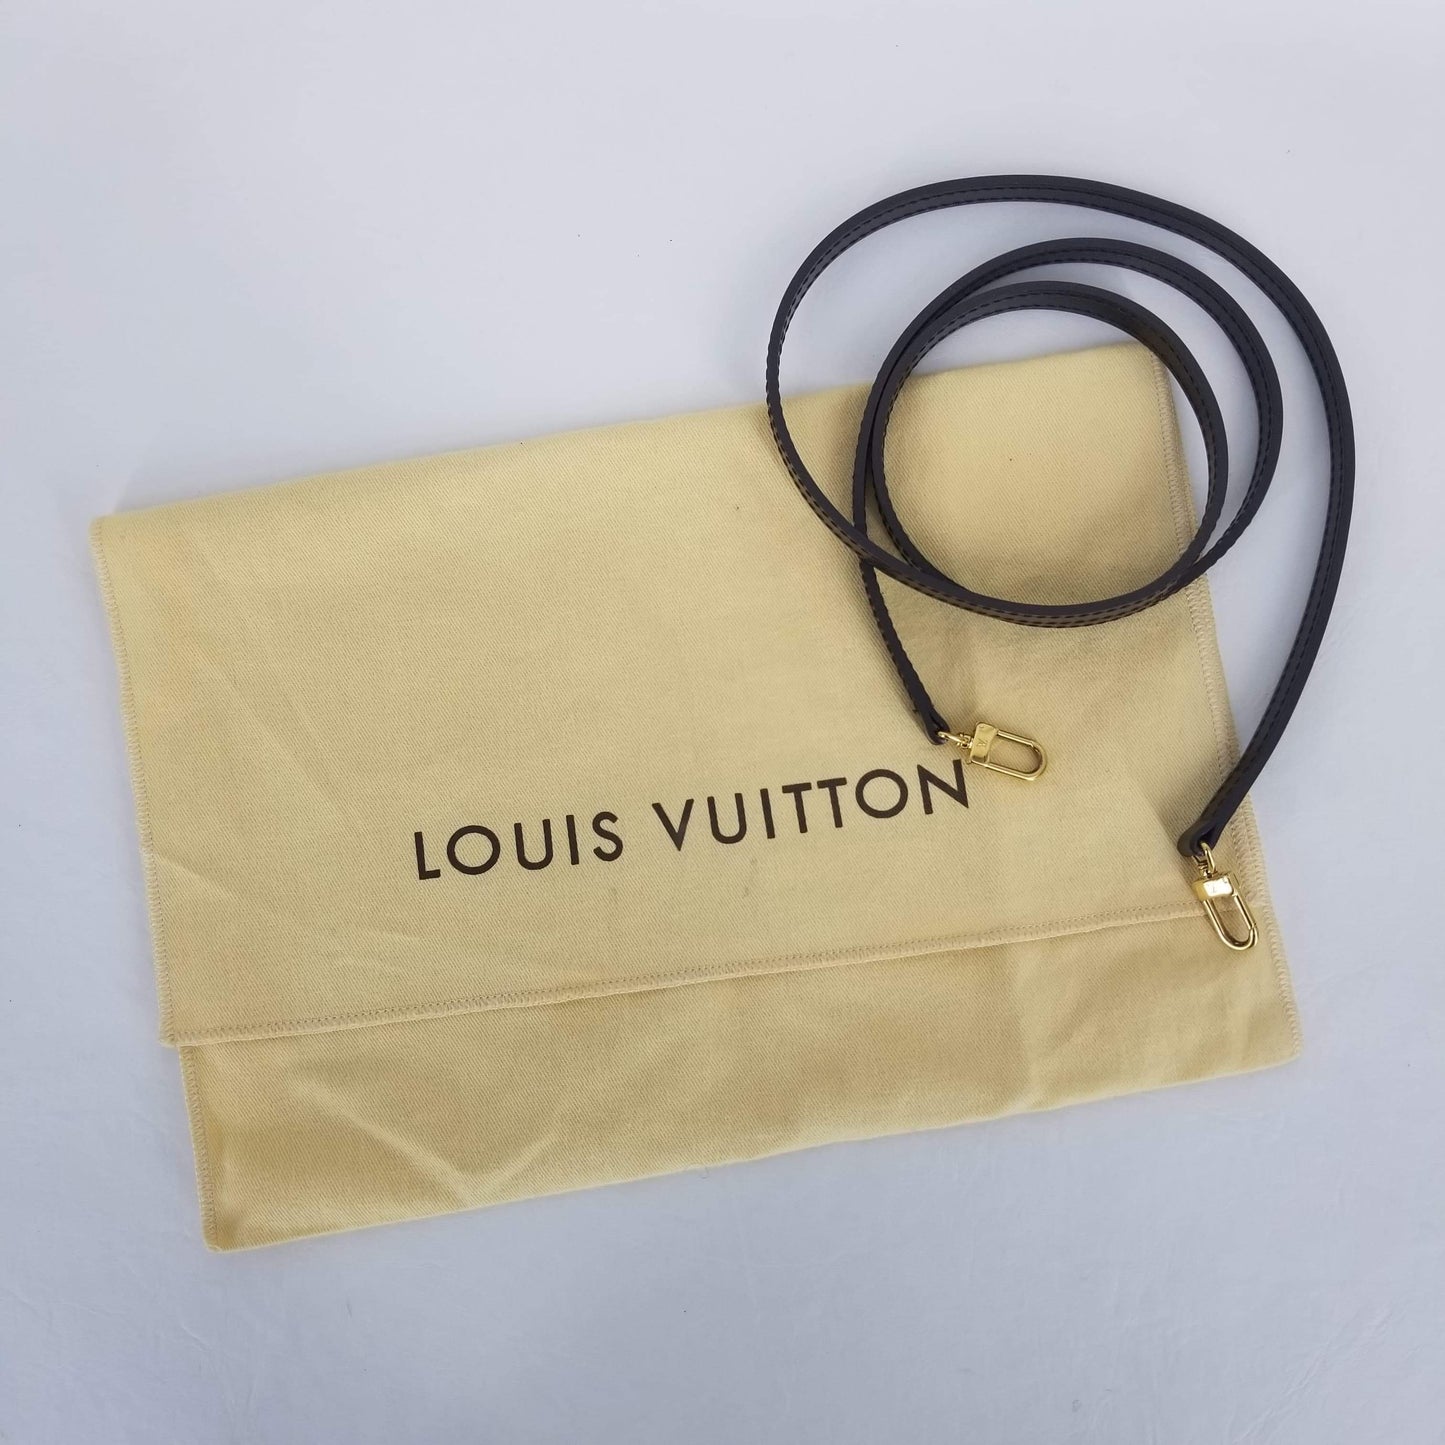 Authentic Louis Vuitton Damier Ebene Eva